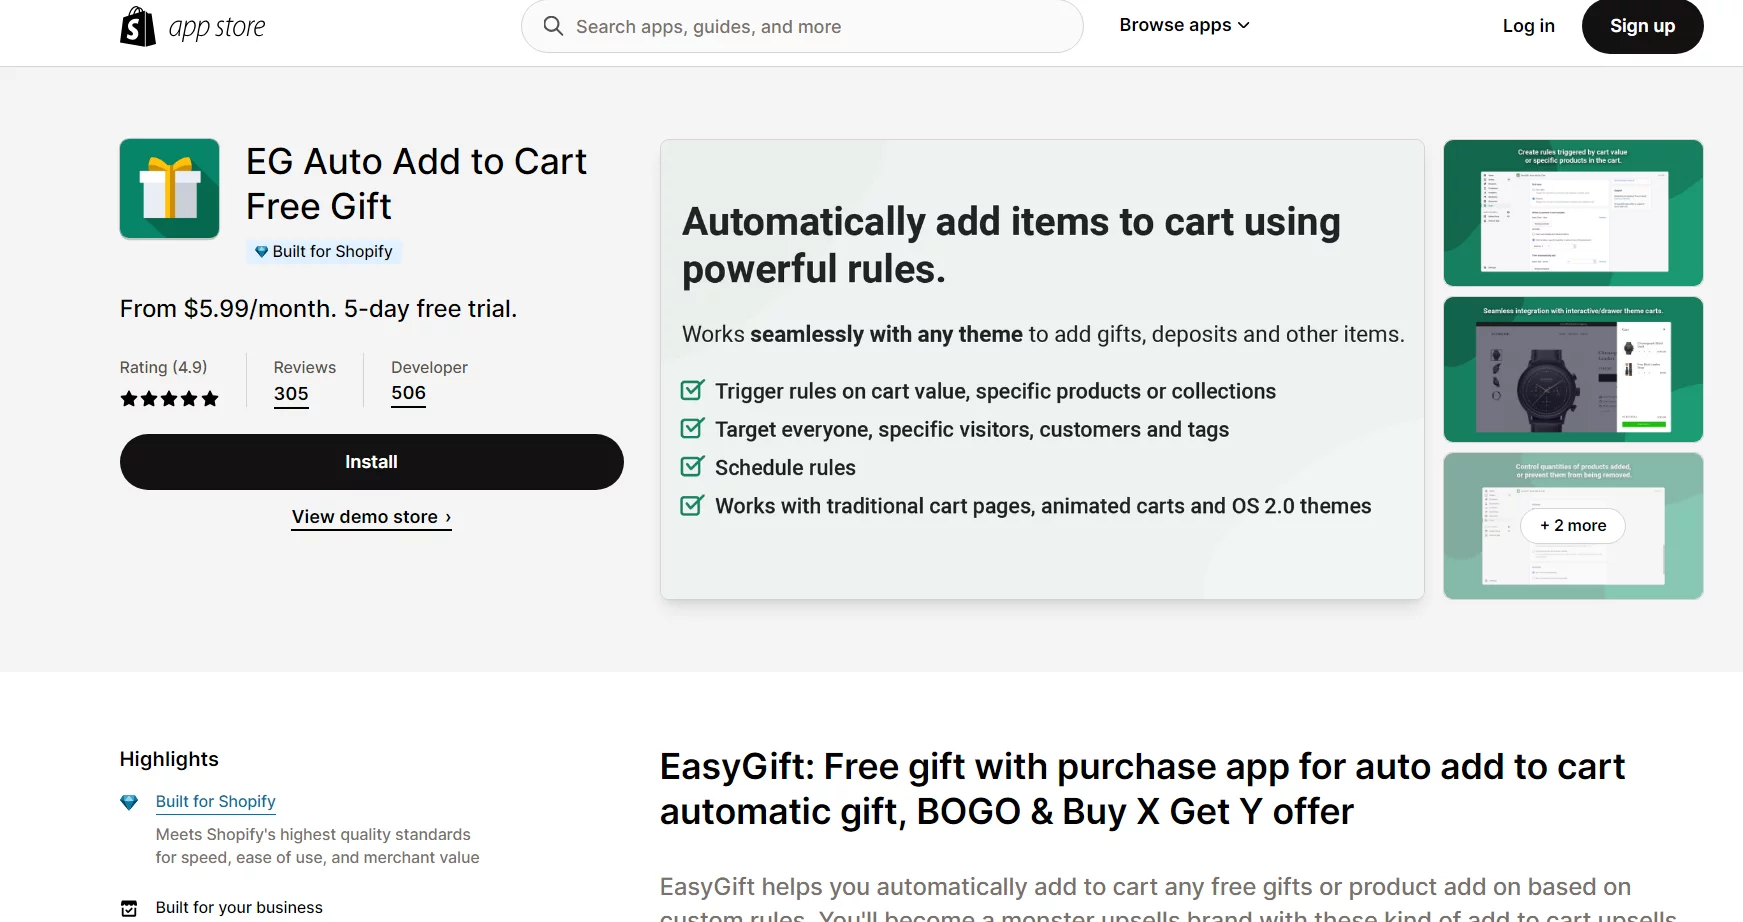 EG Auto Add to Cart Free Gift